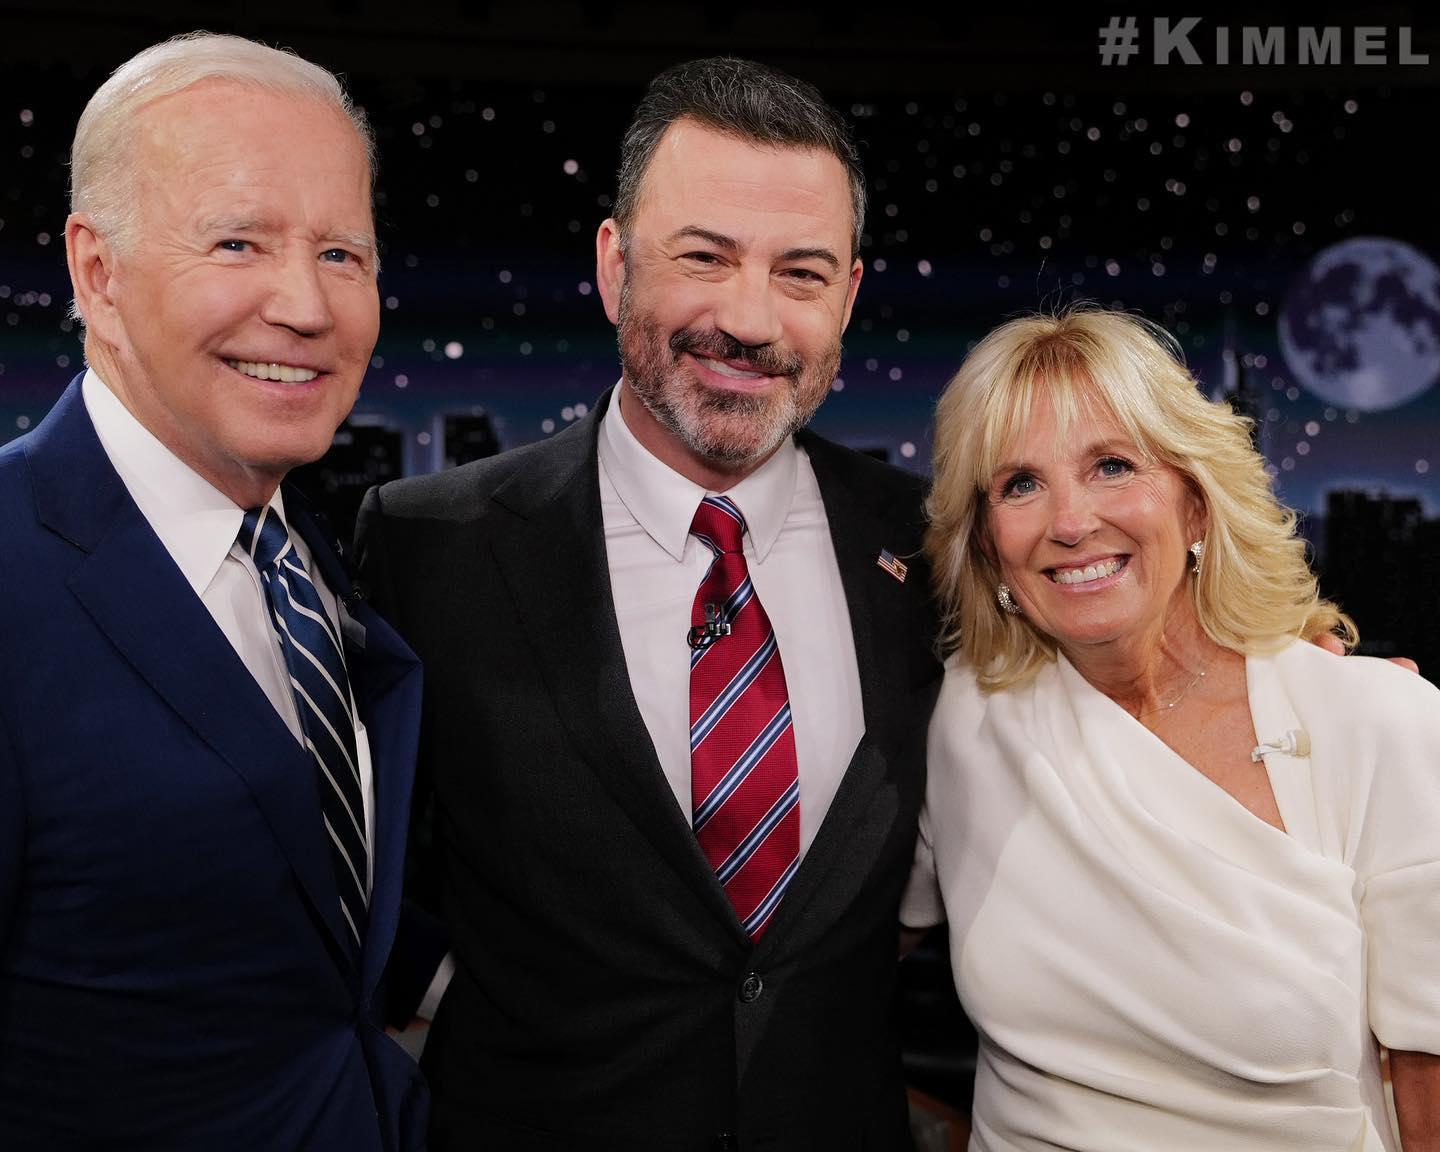 Jimmy Kimmel, Joe Biden, and Dr. Jill Biden